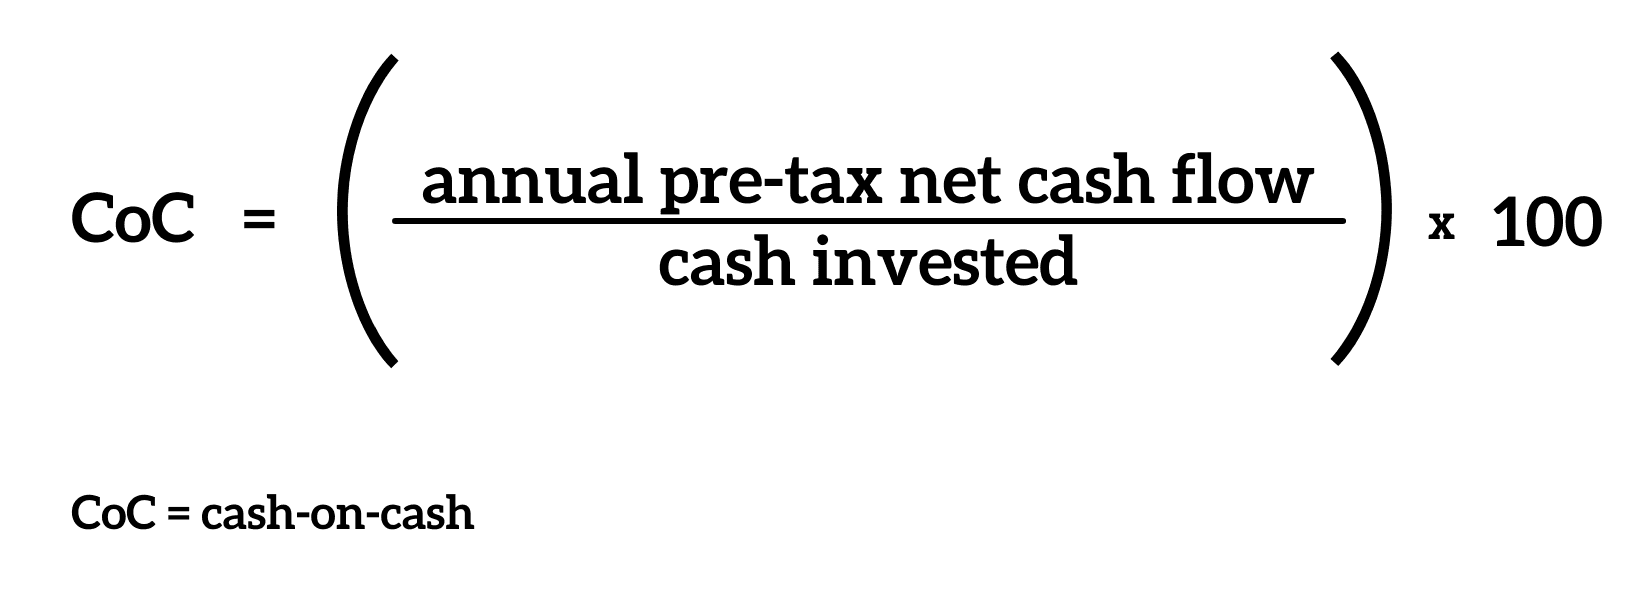 General calculation for cash-on-cash